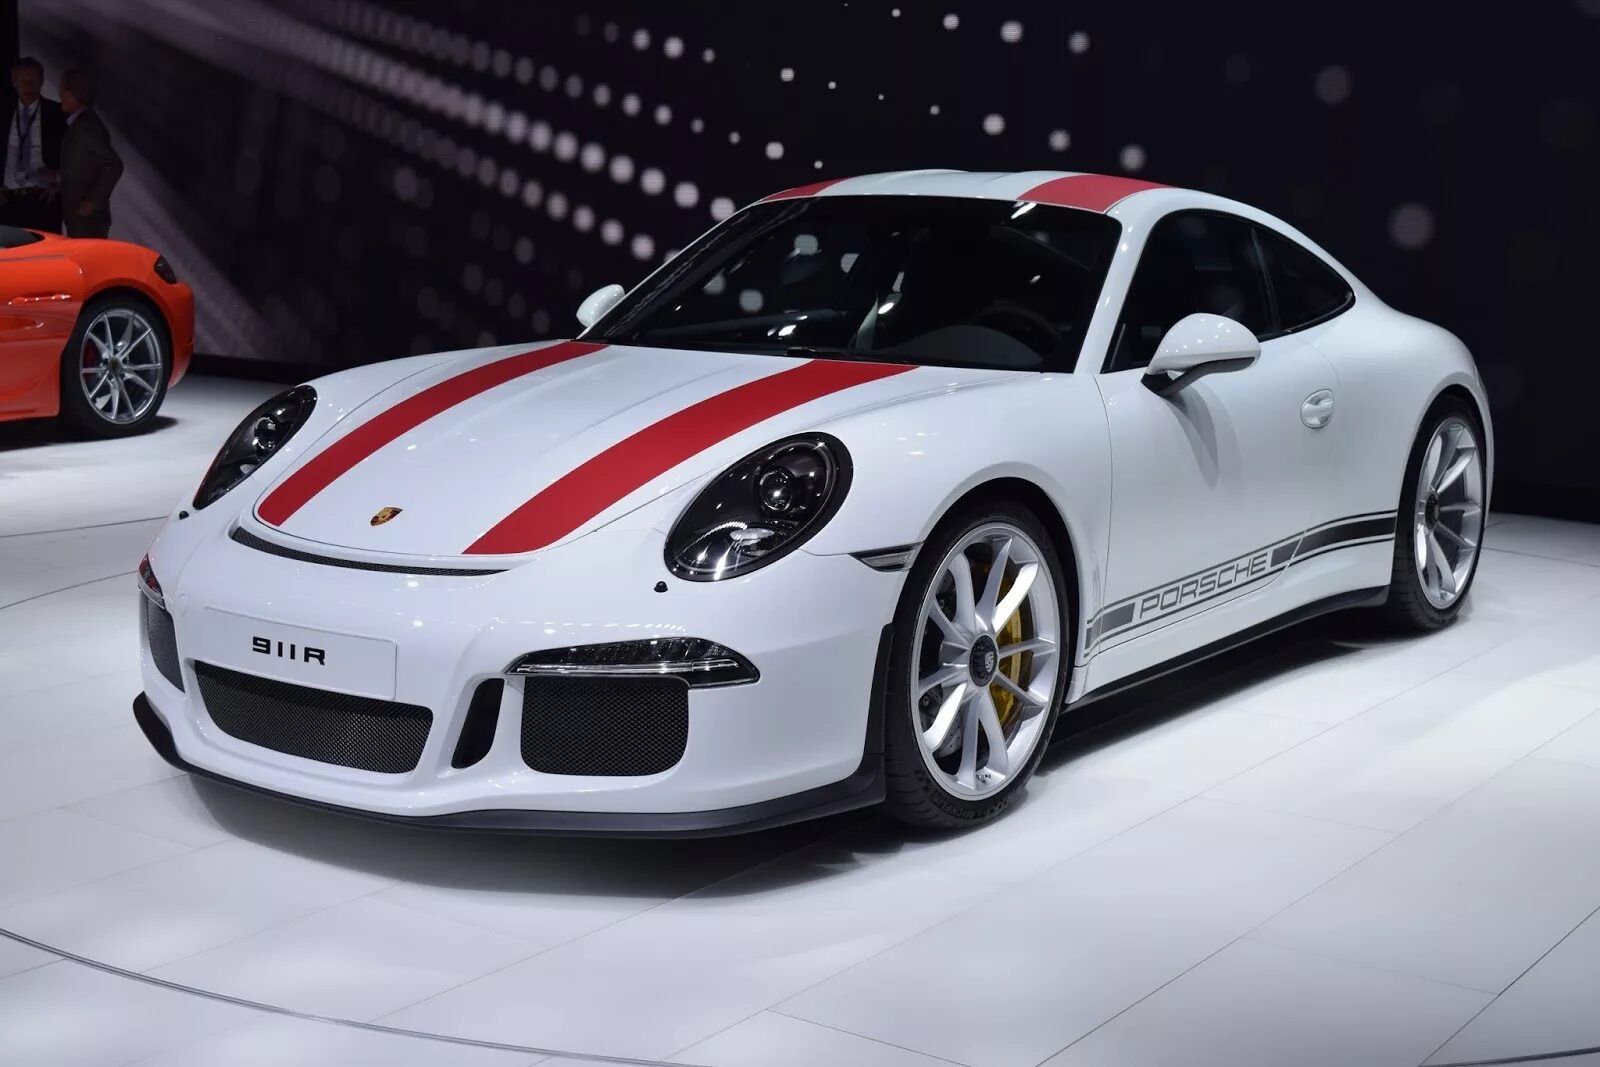 Порше страна. Порше 911 r. 2017 Porsche 911 r. Порше CTS. Порше 911 спорт 2016.